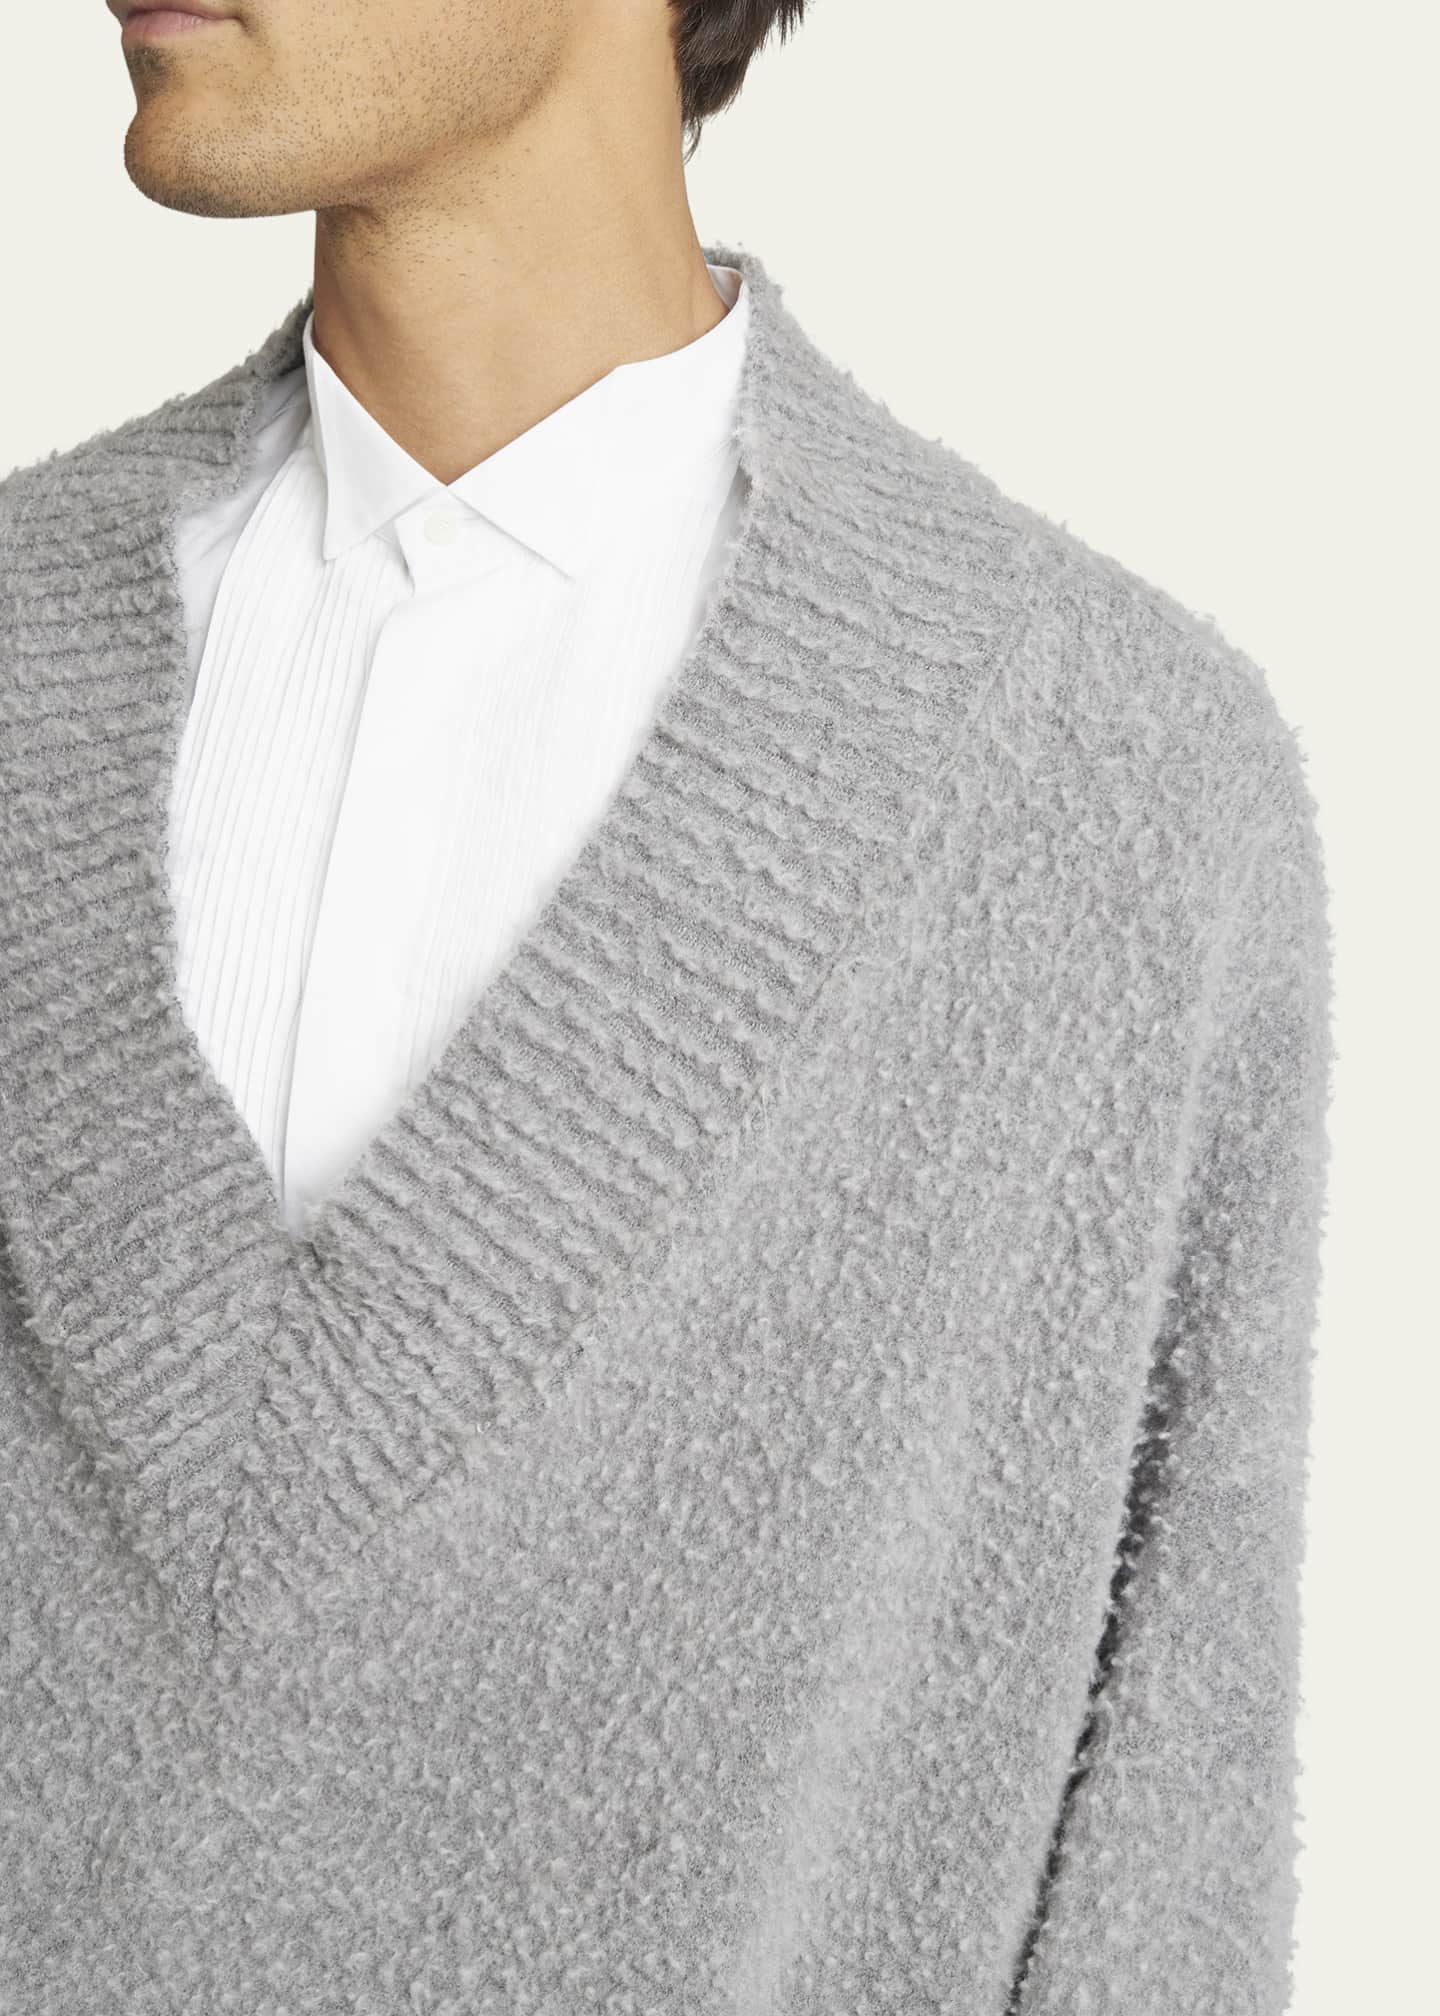 Loewe Men's Poly-Wool Textured Oversized Sweater